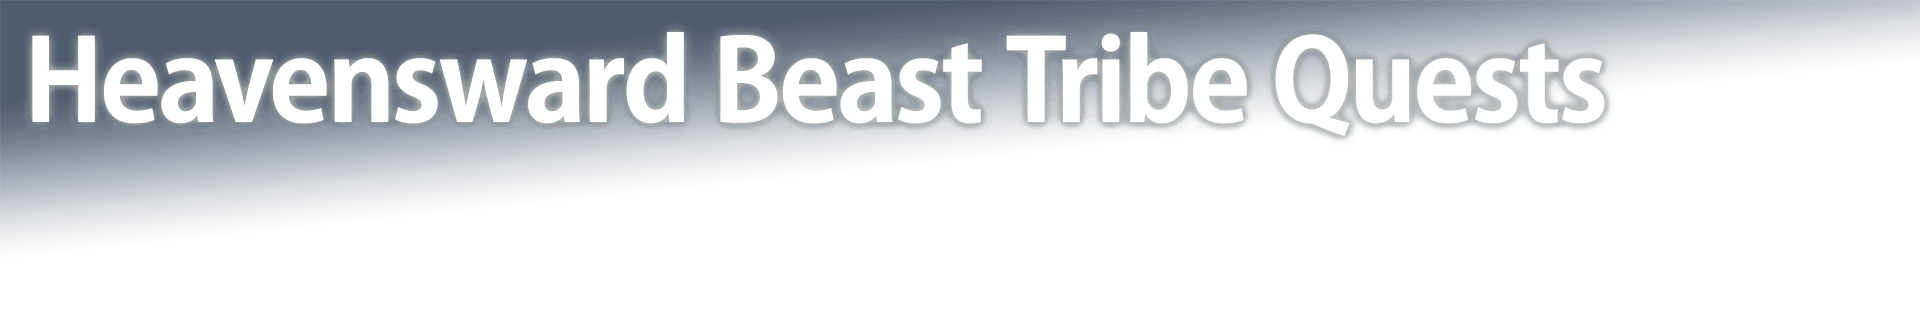 Heavensward Beast Tribe Quests